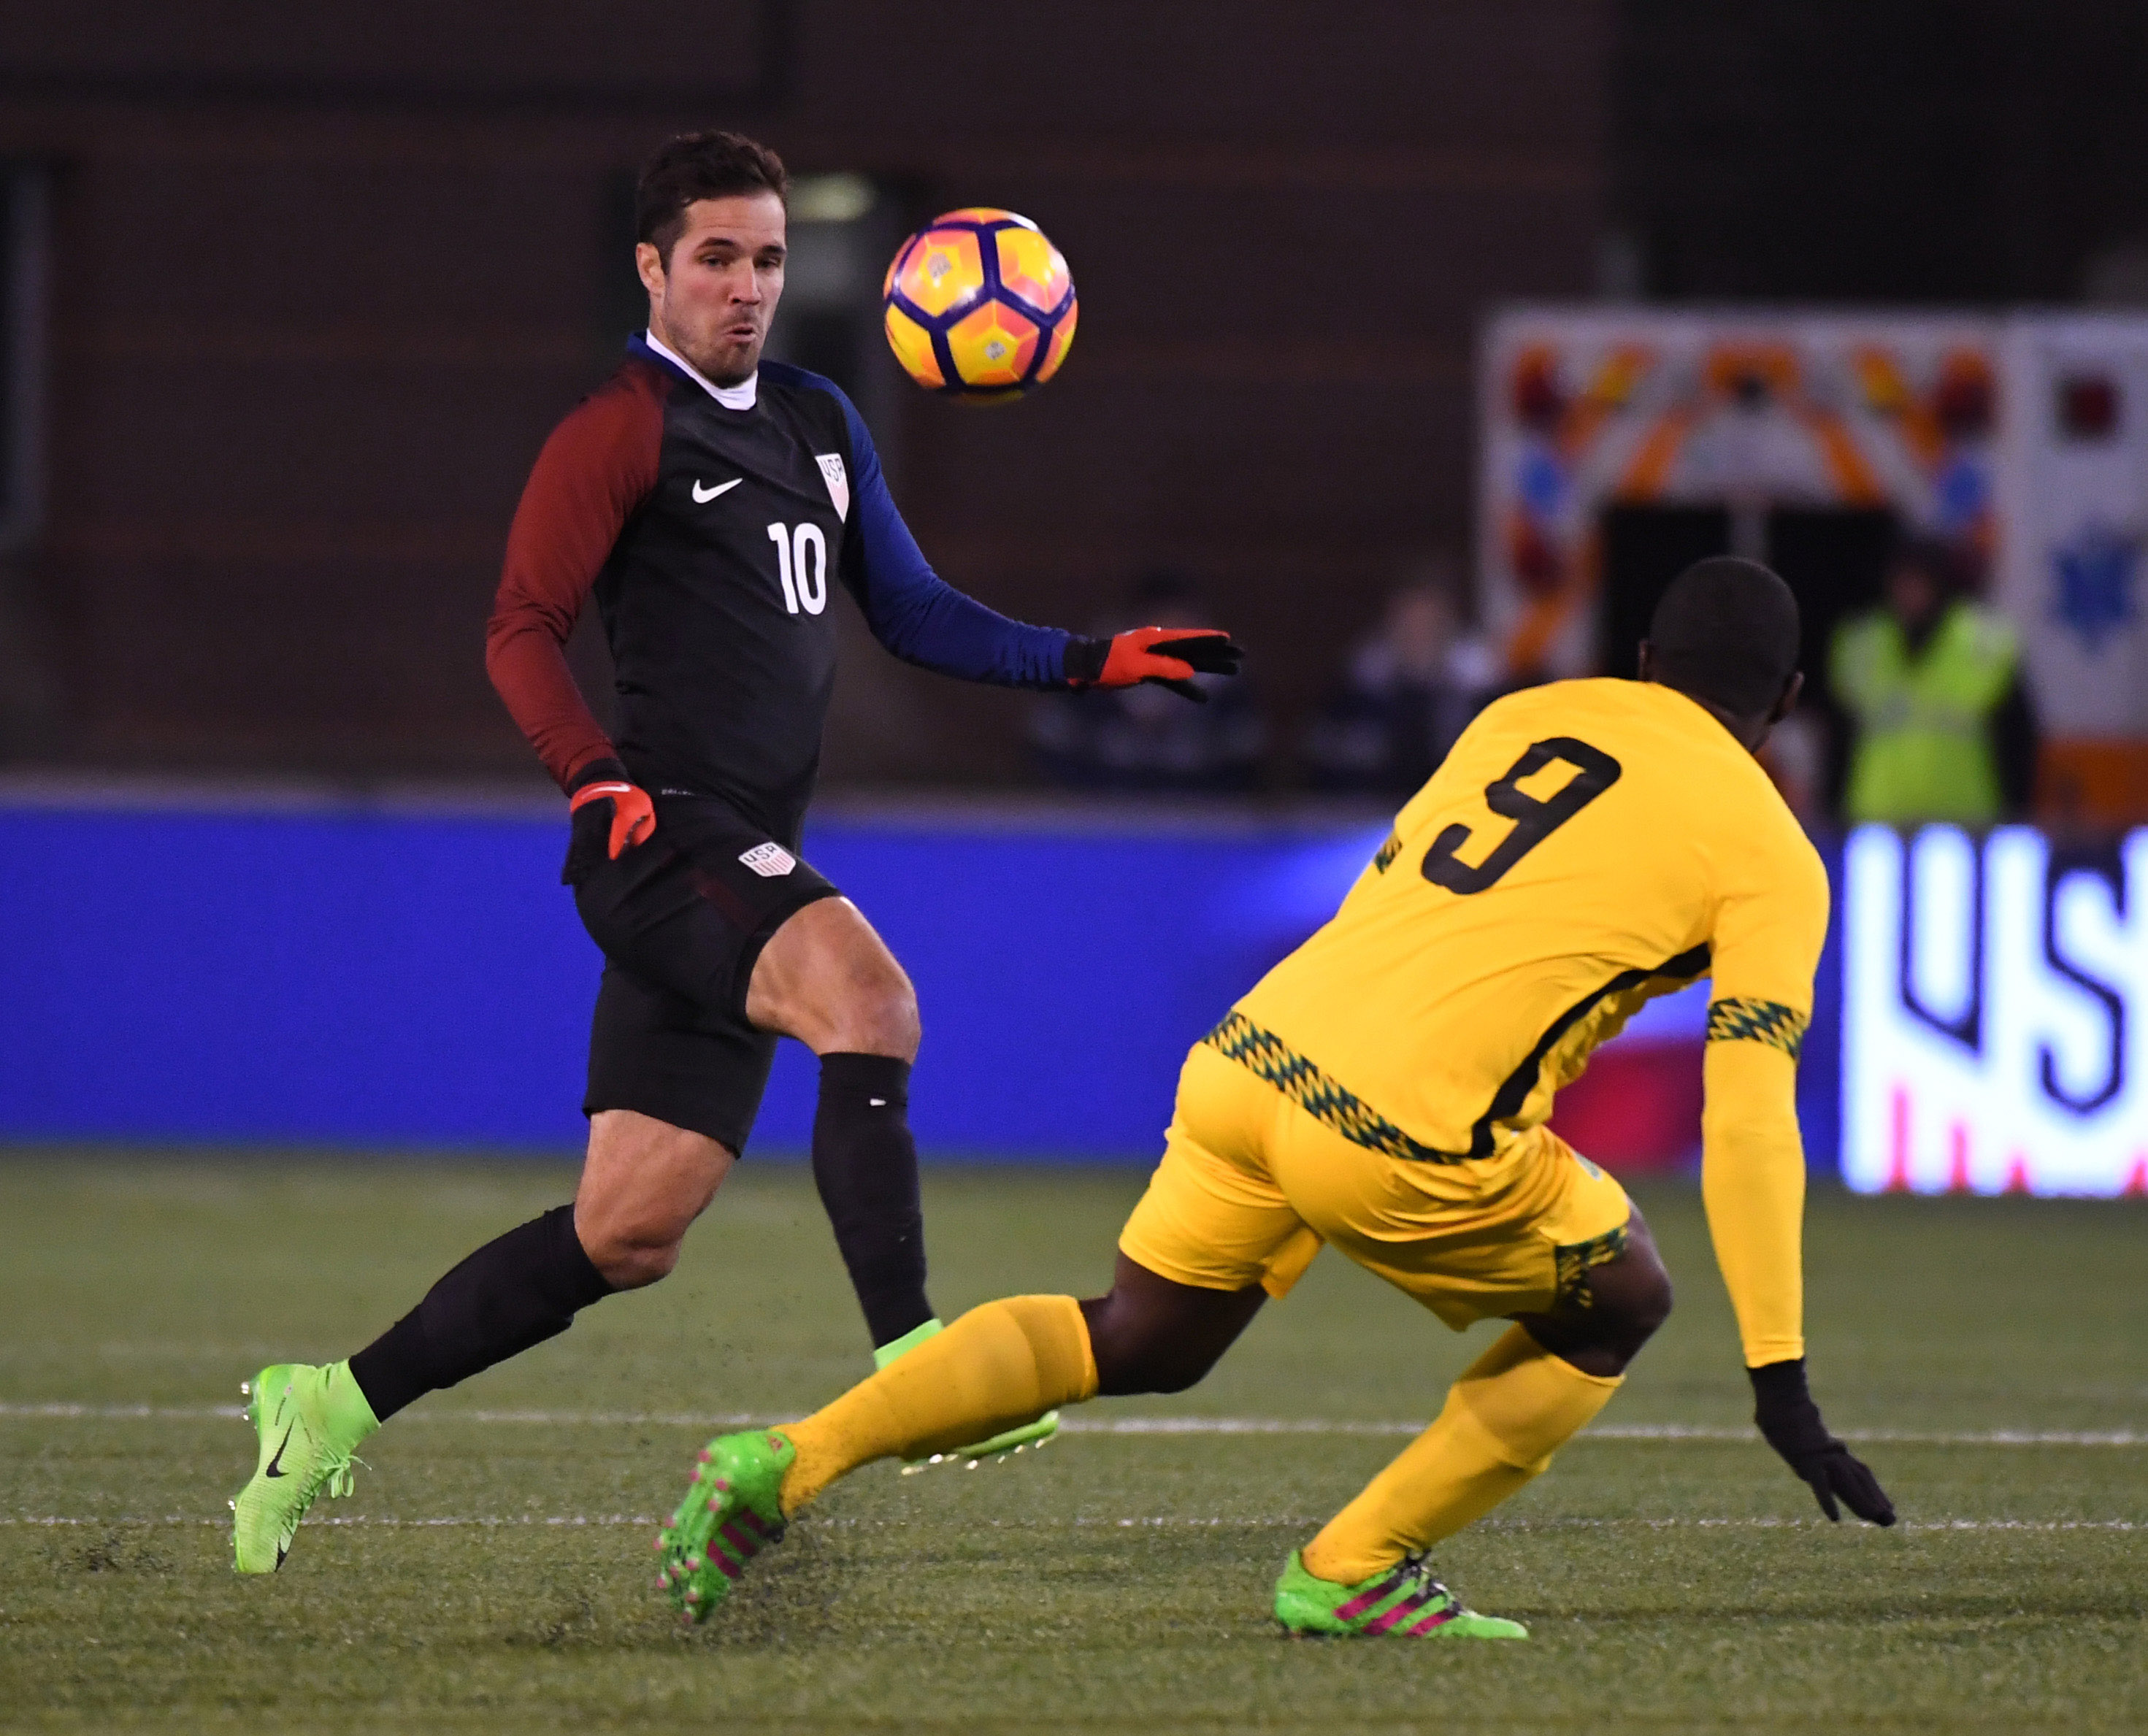 Soccer: International Men's Soccer Friendly-Jamaica at USA